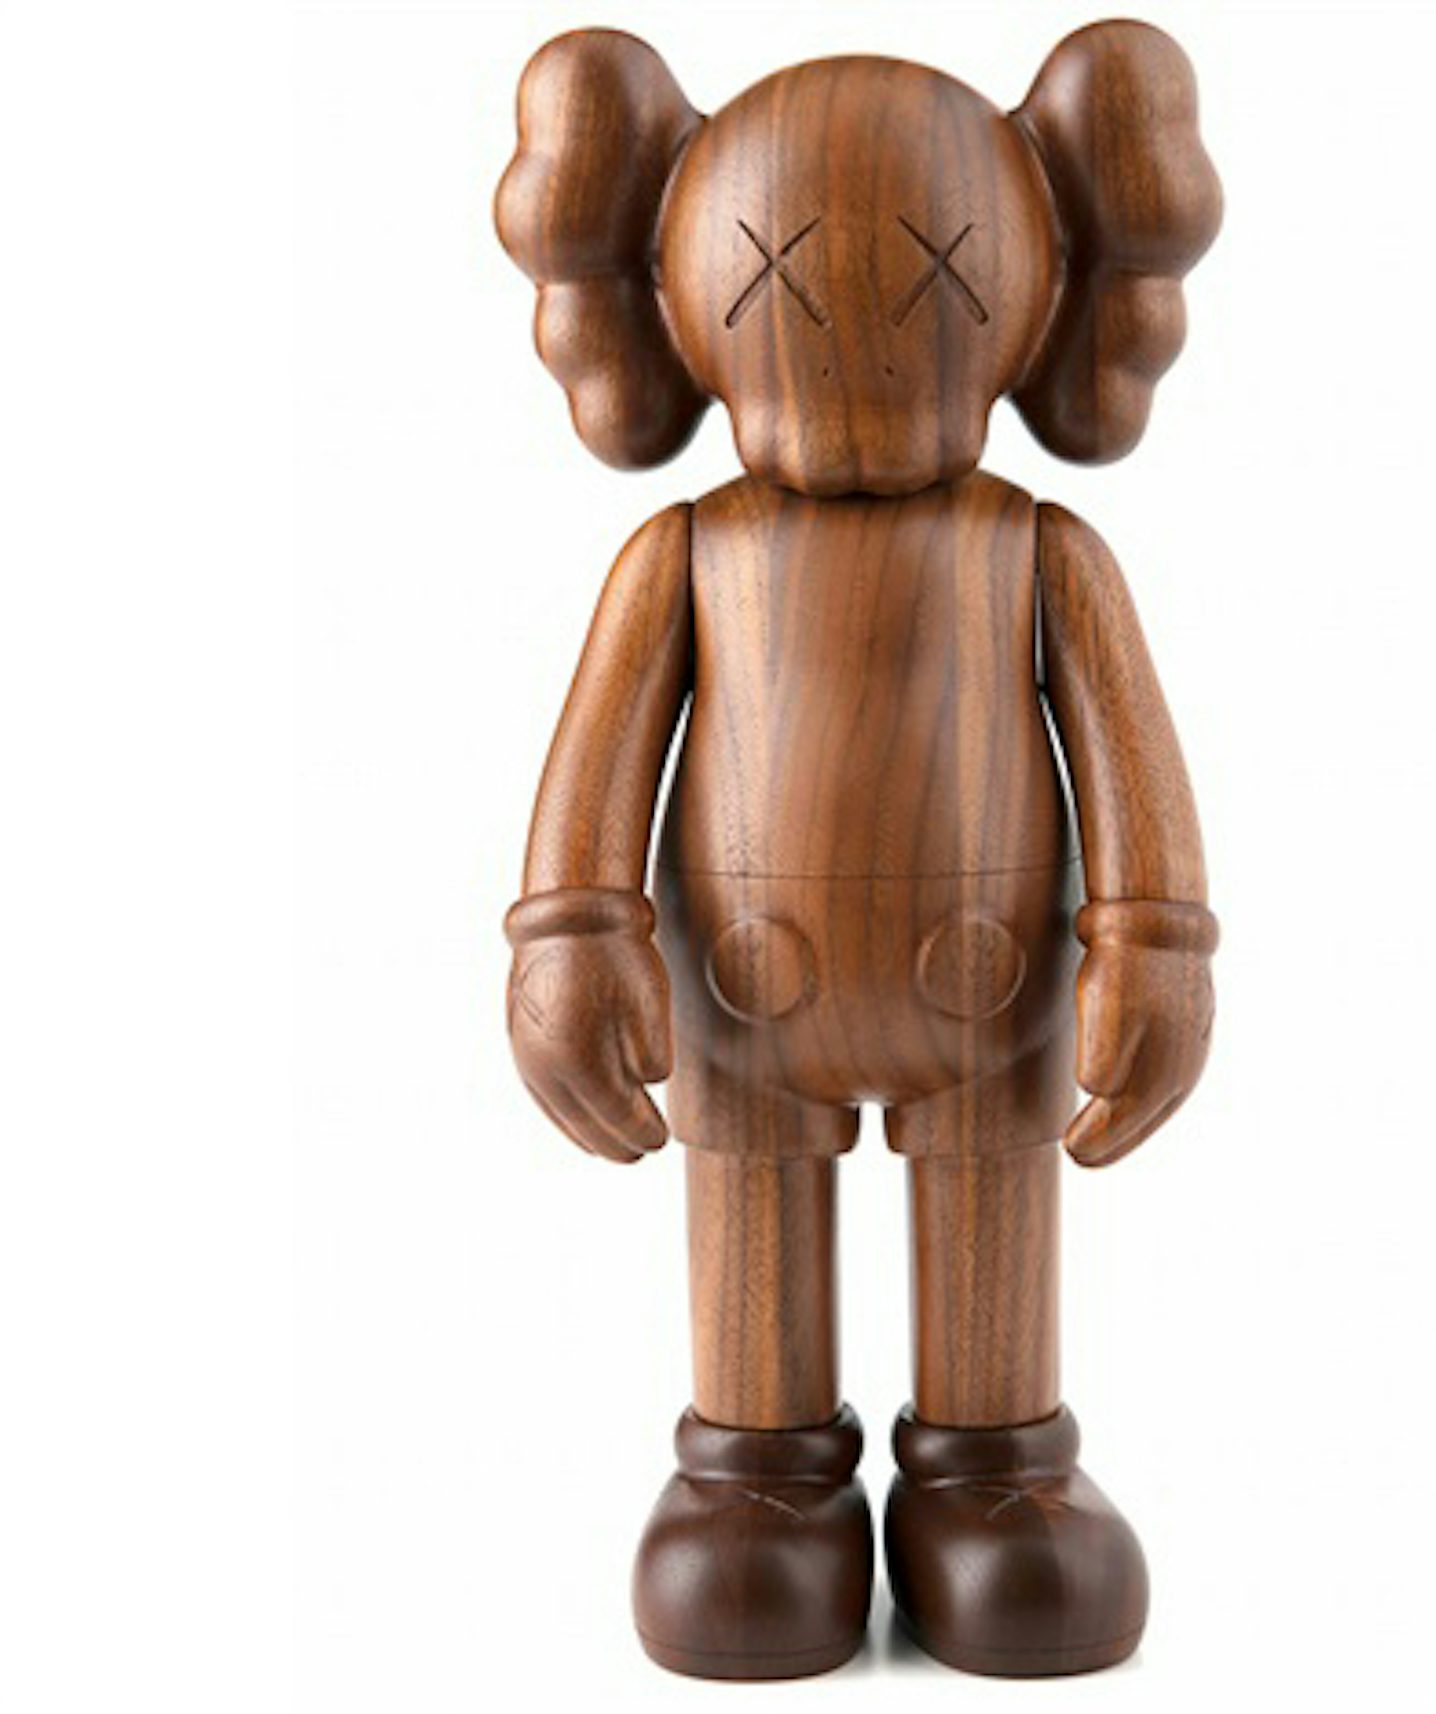 Louis Vuitton Vivienne Doudou Wood Figure GI0582 White - US